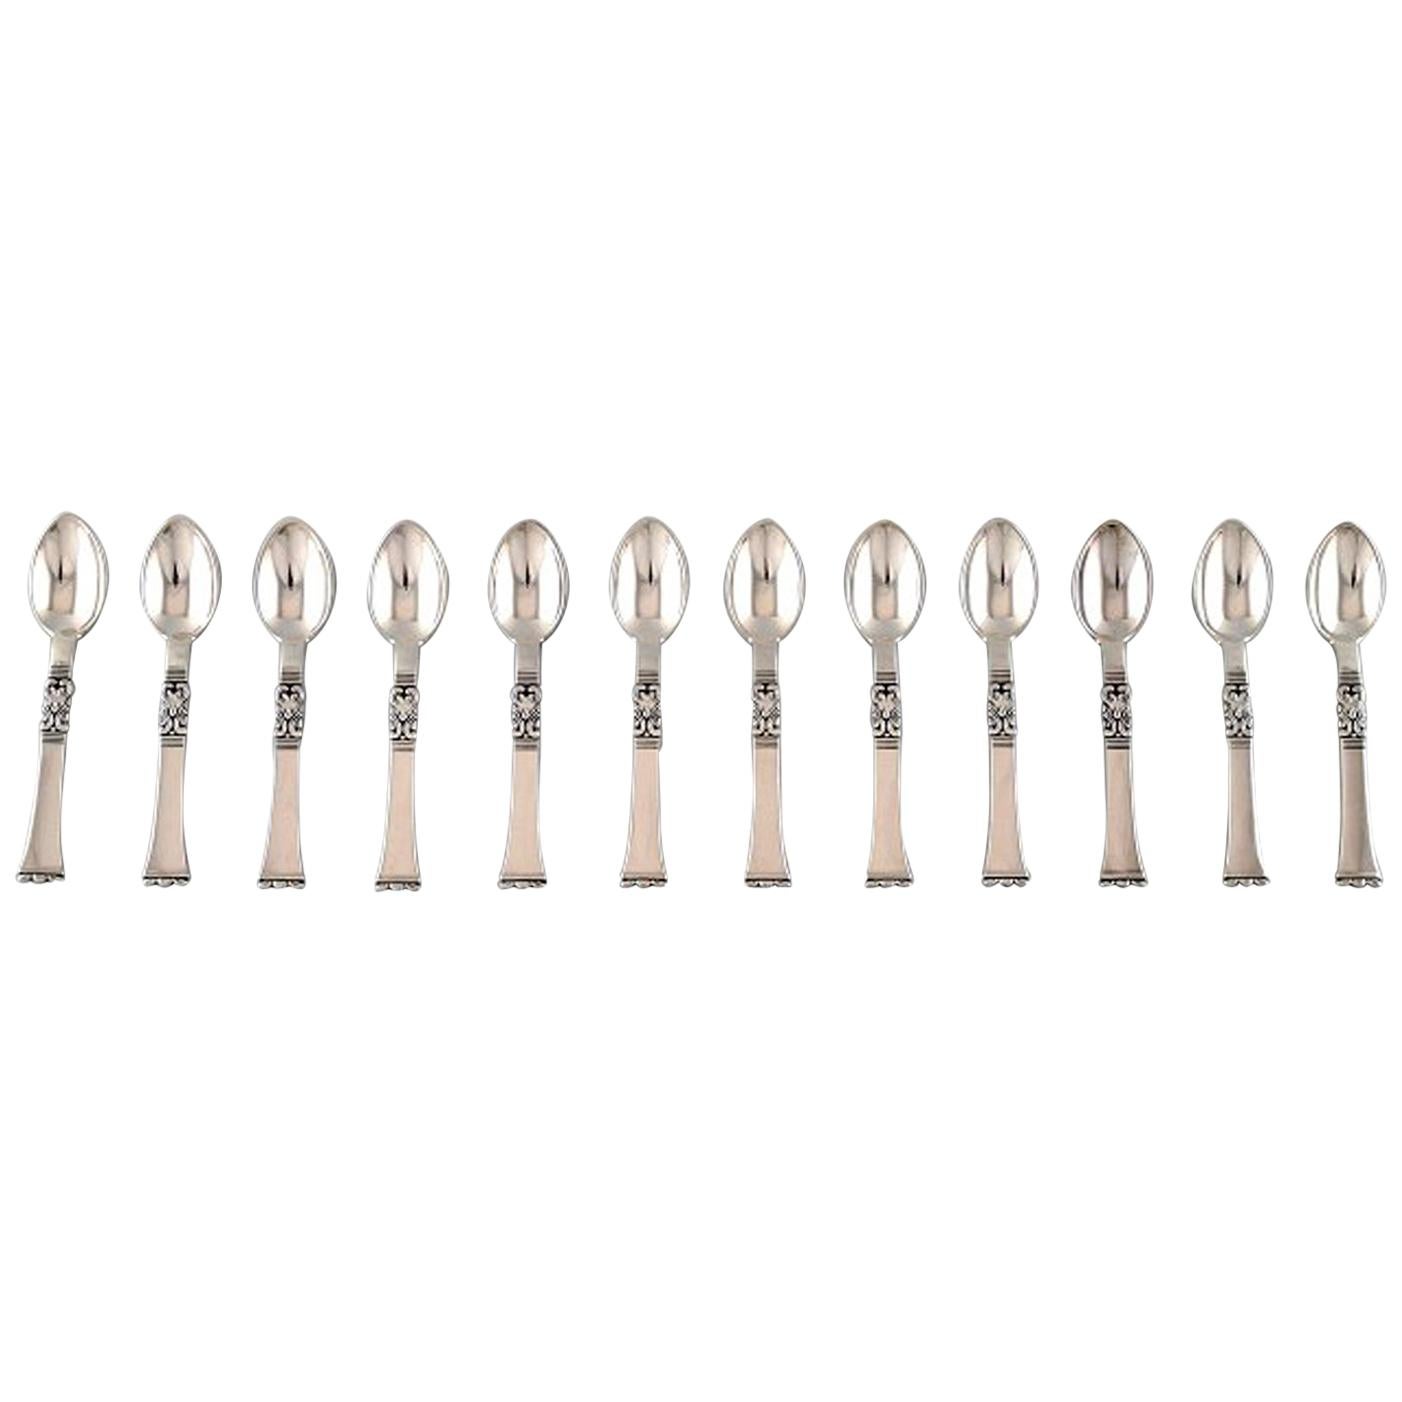 Poul Frigast, Danish silversmith. Set of 12 coffee spoons in silver.